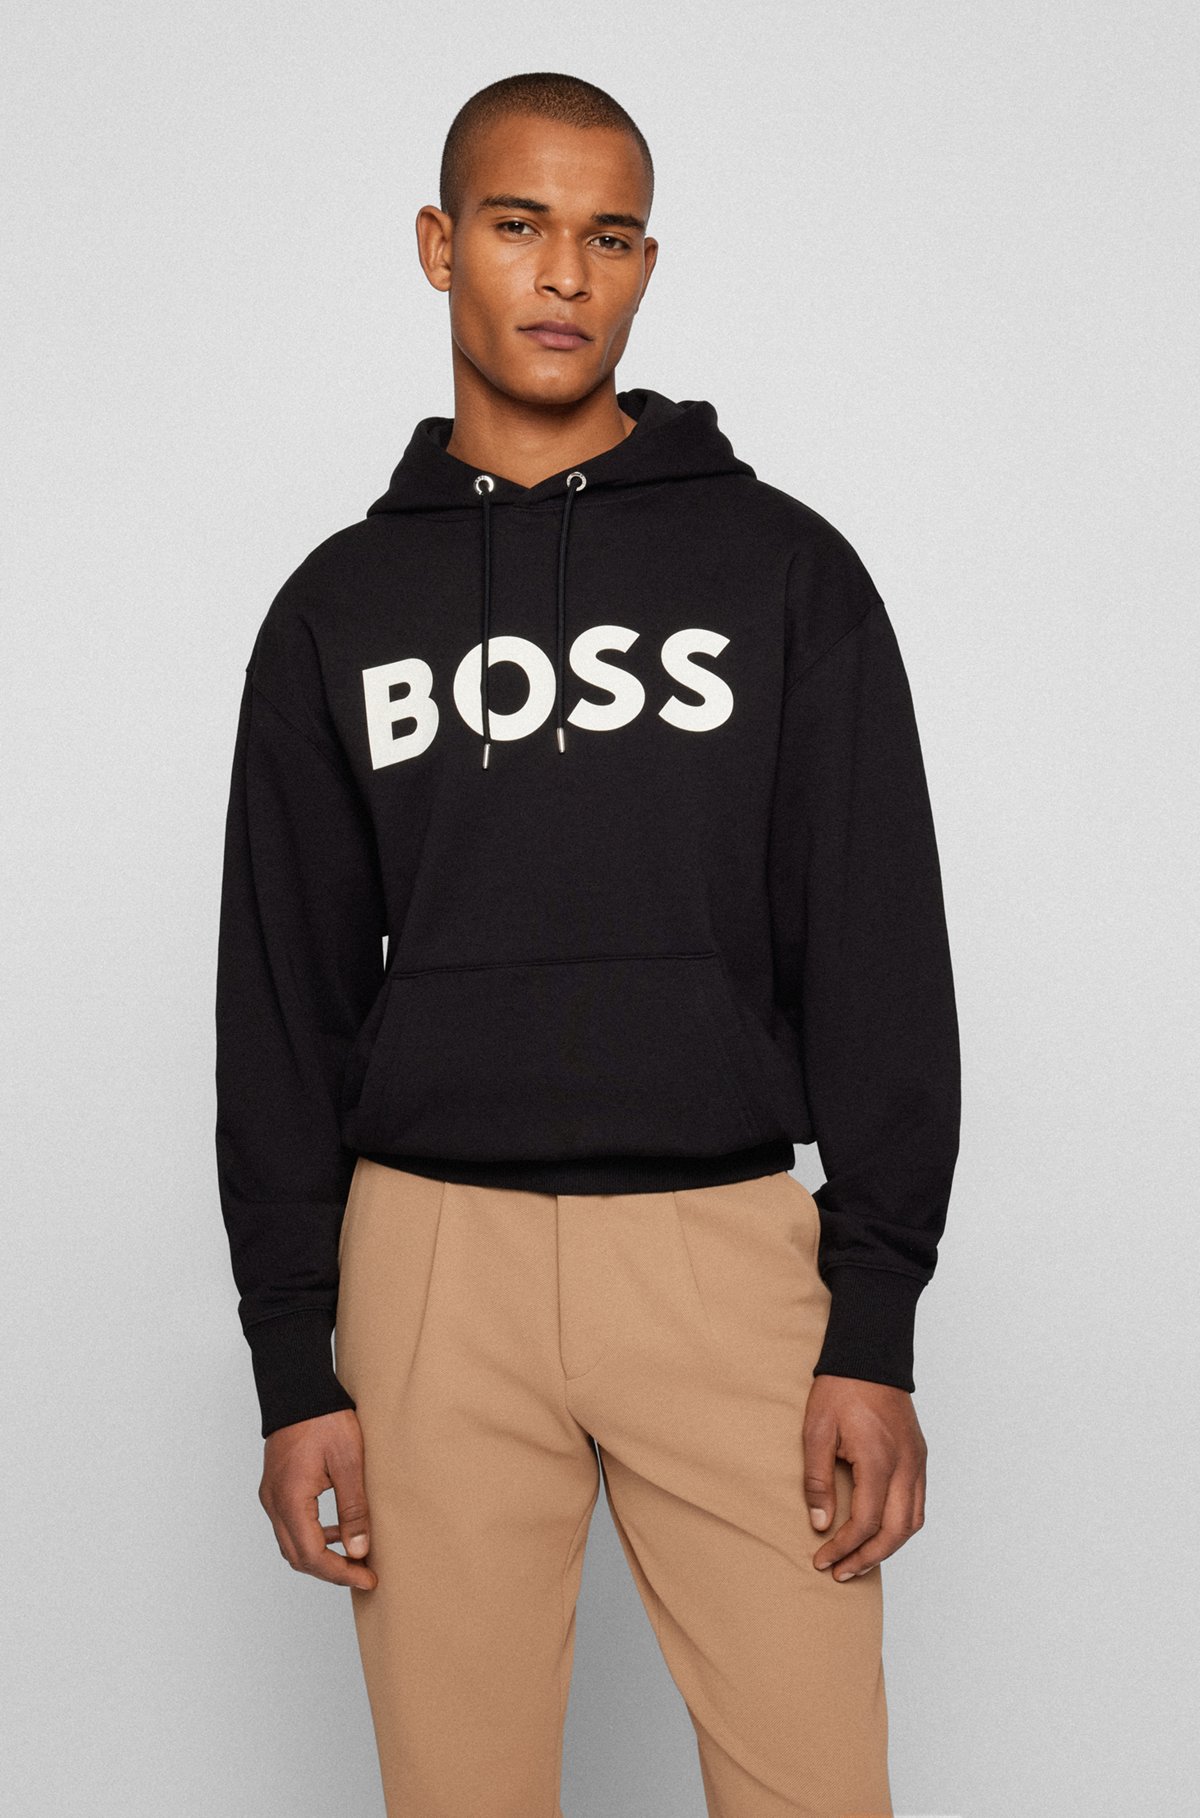 BOSS - Cotton hooded sweatshirt with contrast logo